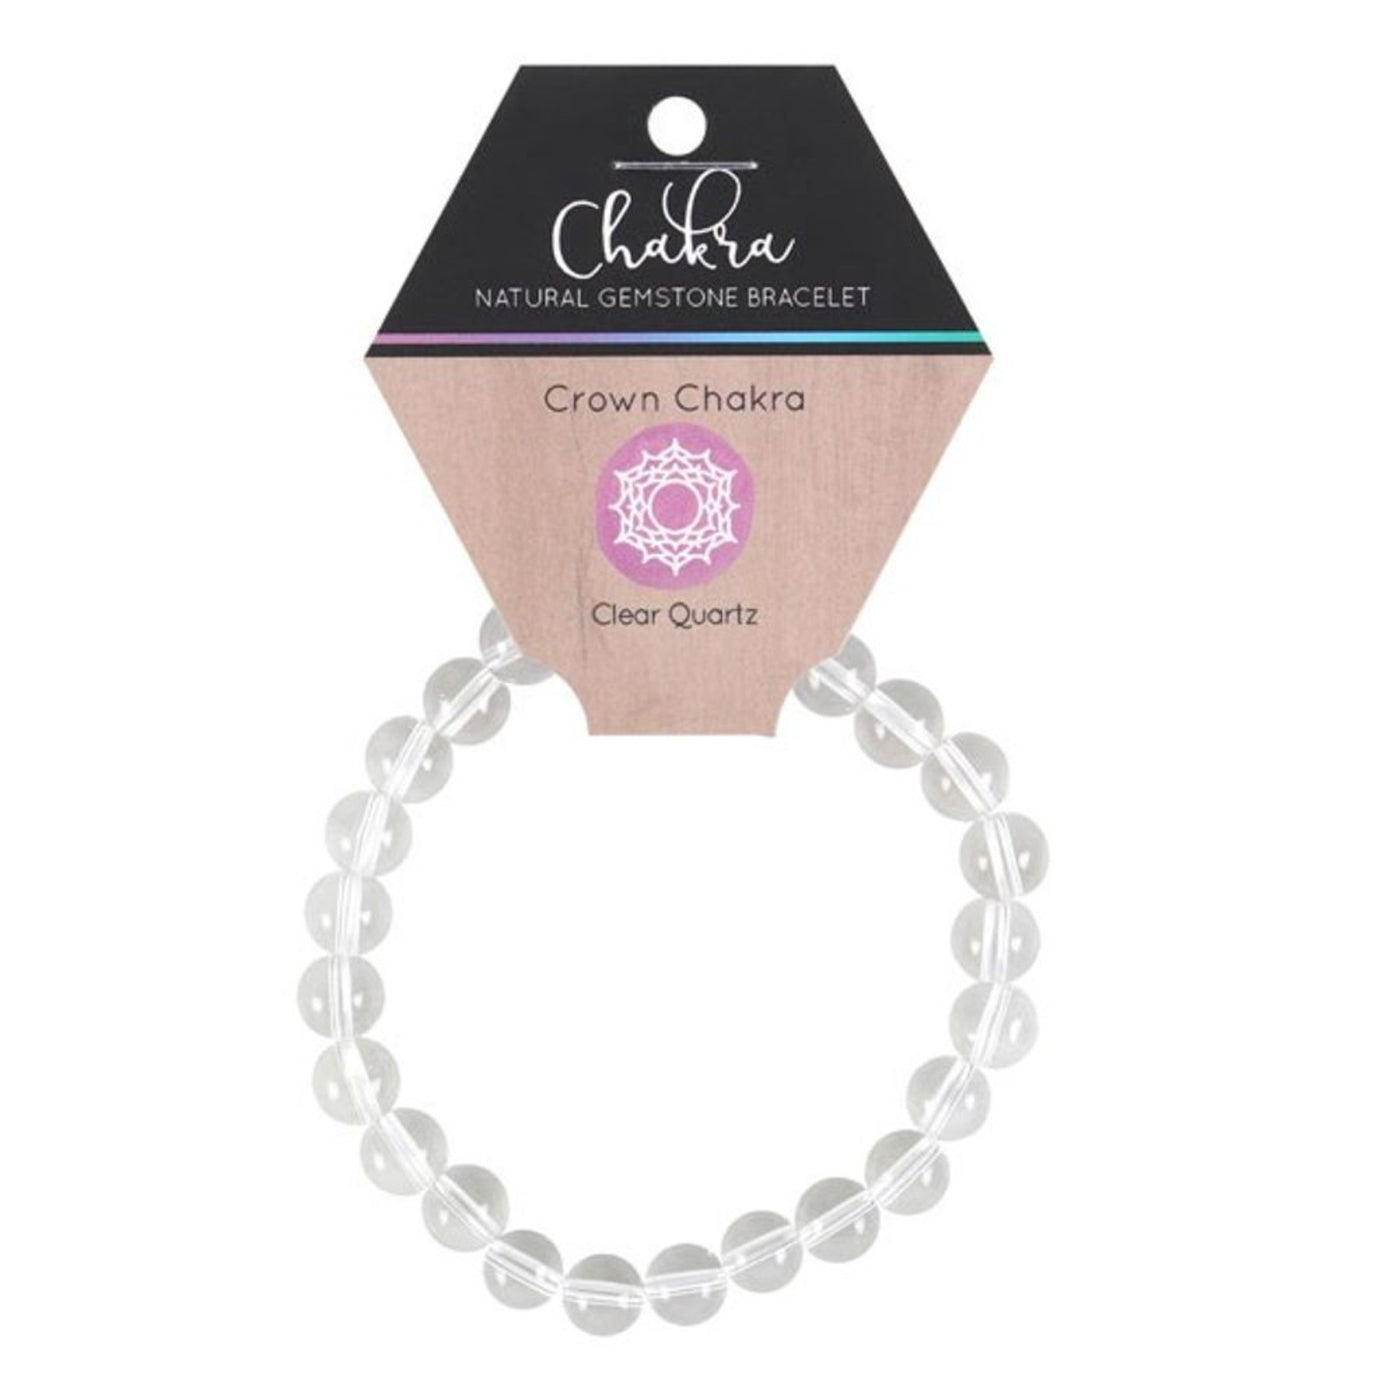 Crown Chakra Clear Quartz Gemstone Bracelet.